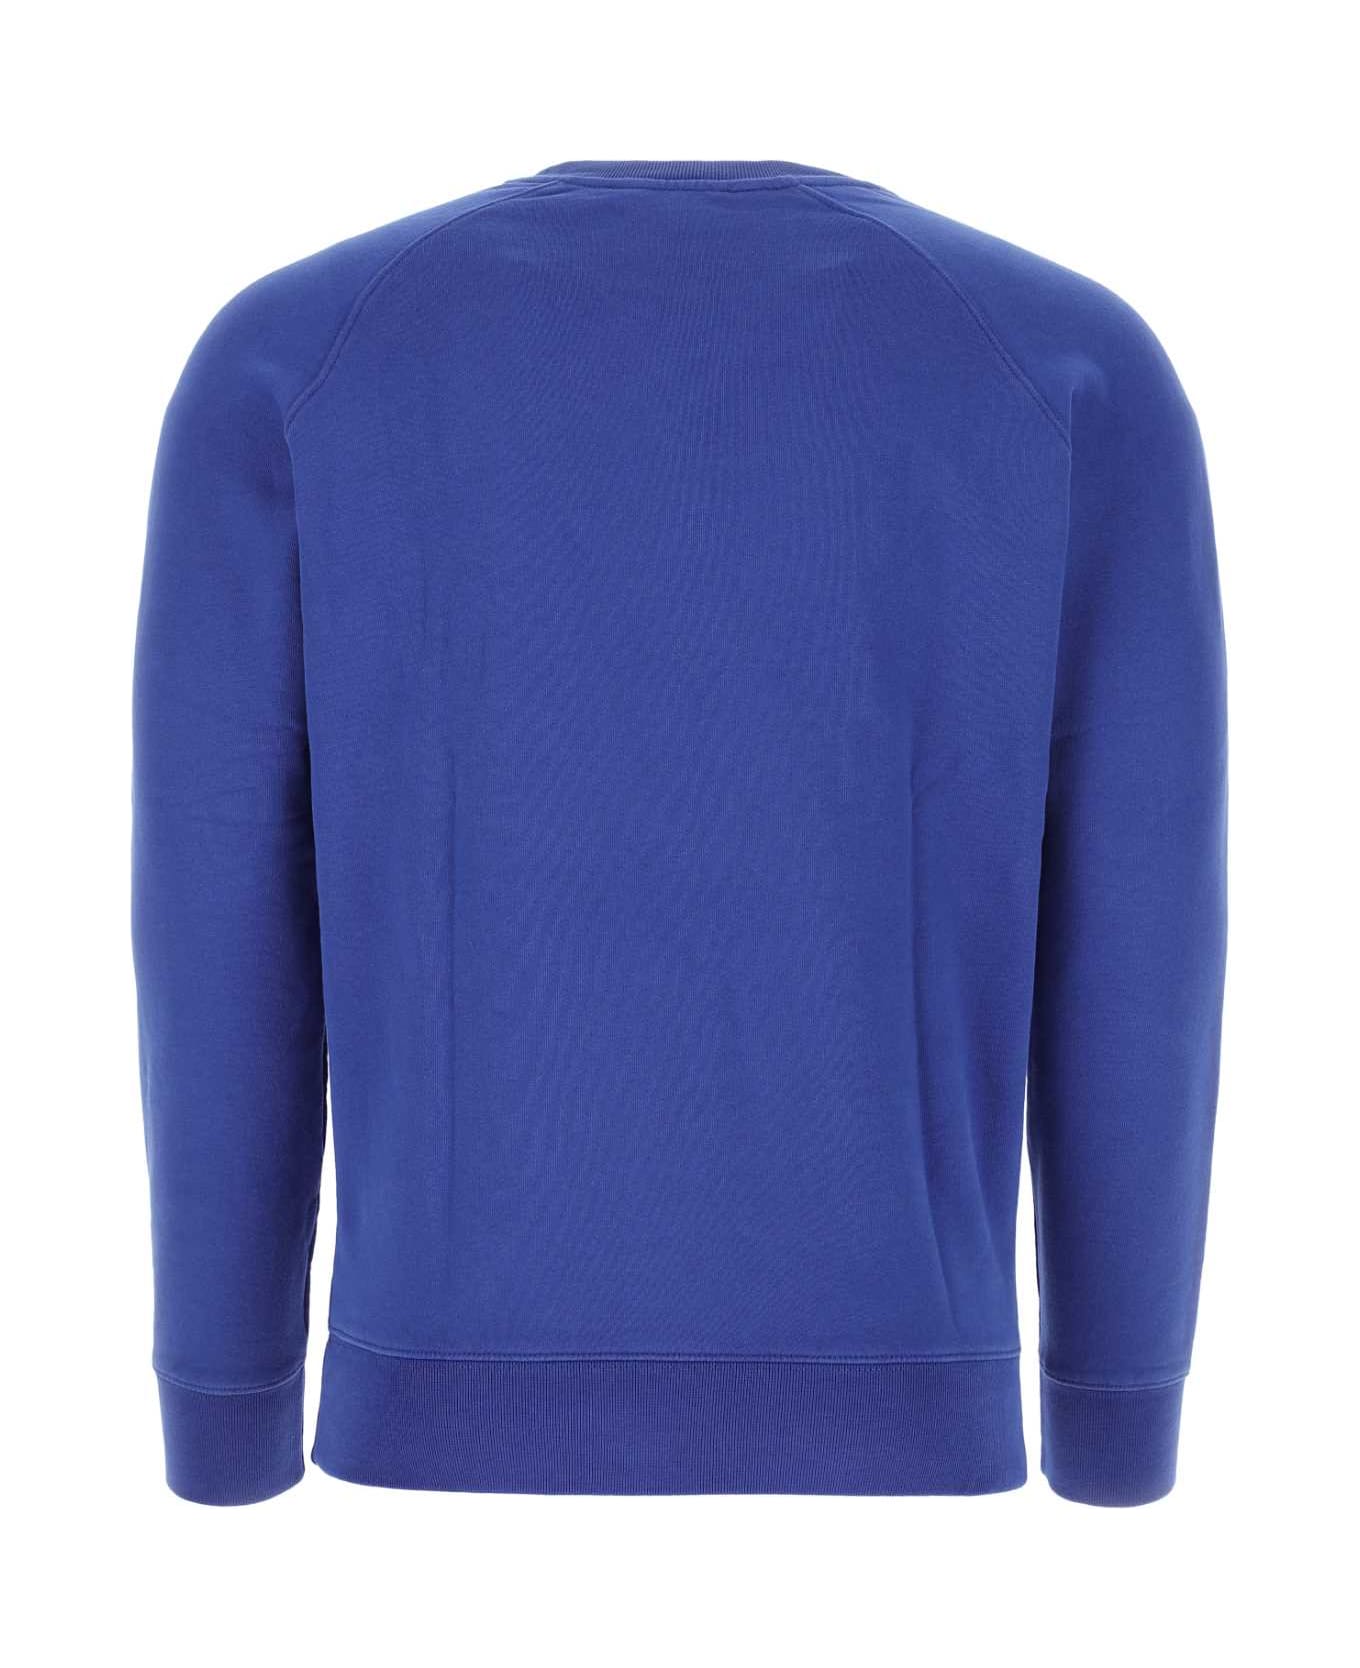 Maison Kitsuné Blue Cotton Sweatshirt - P485 フリース